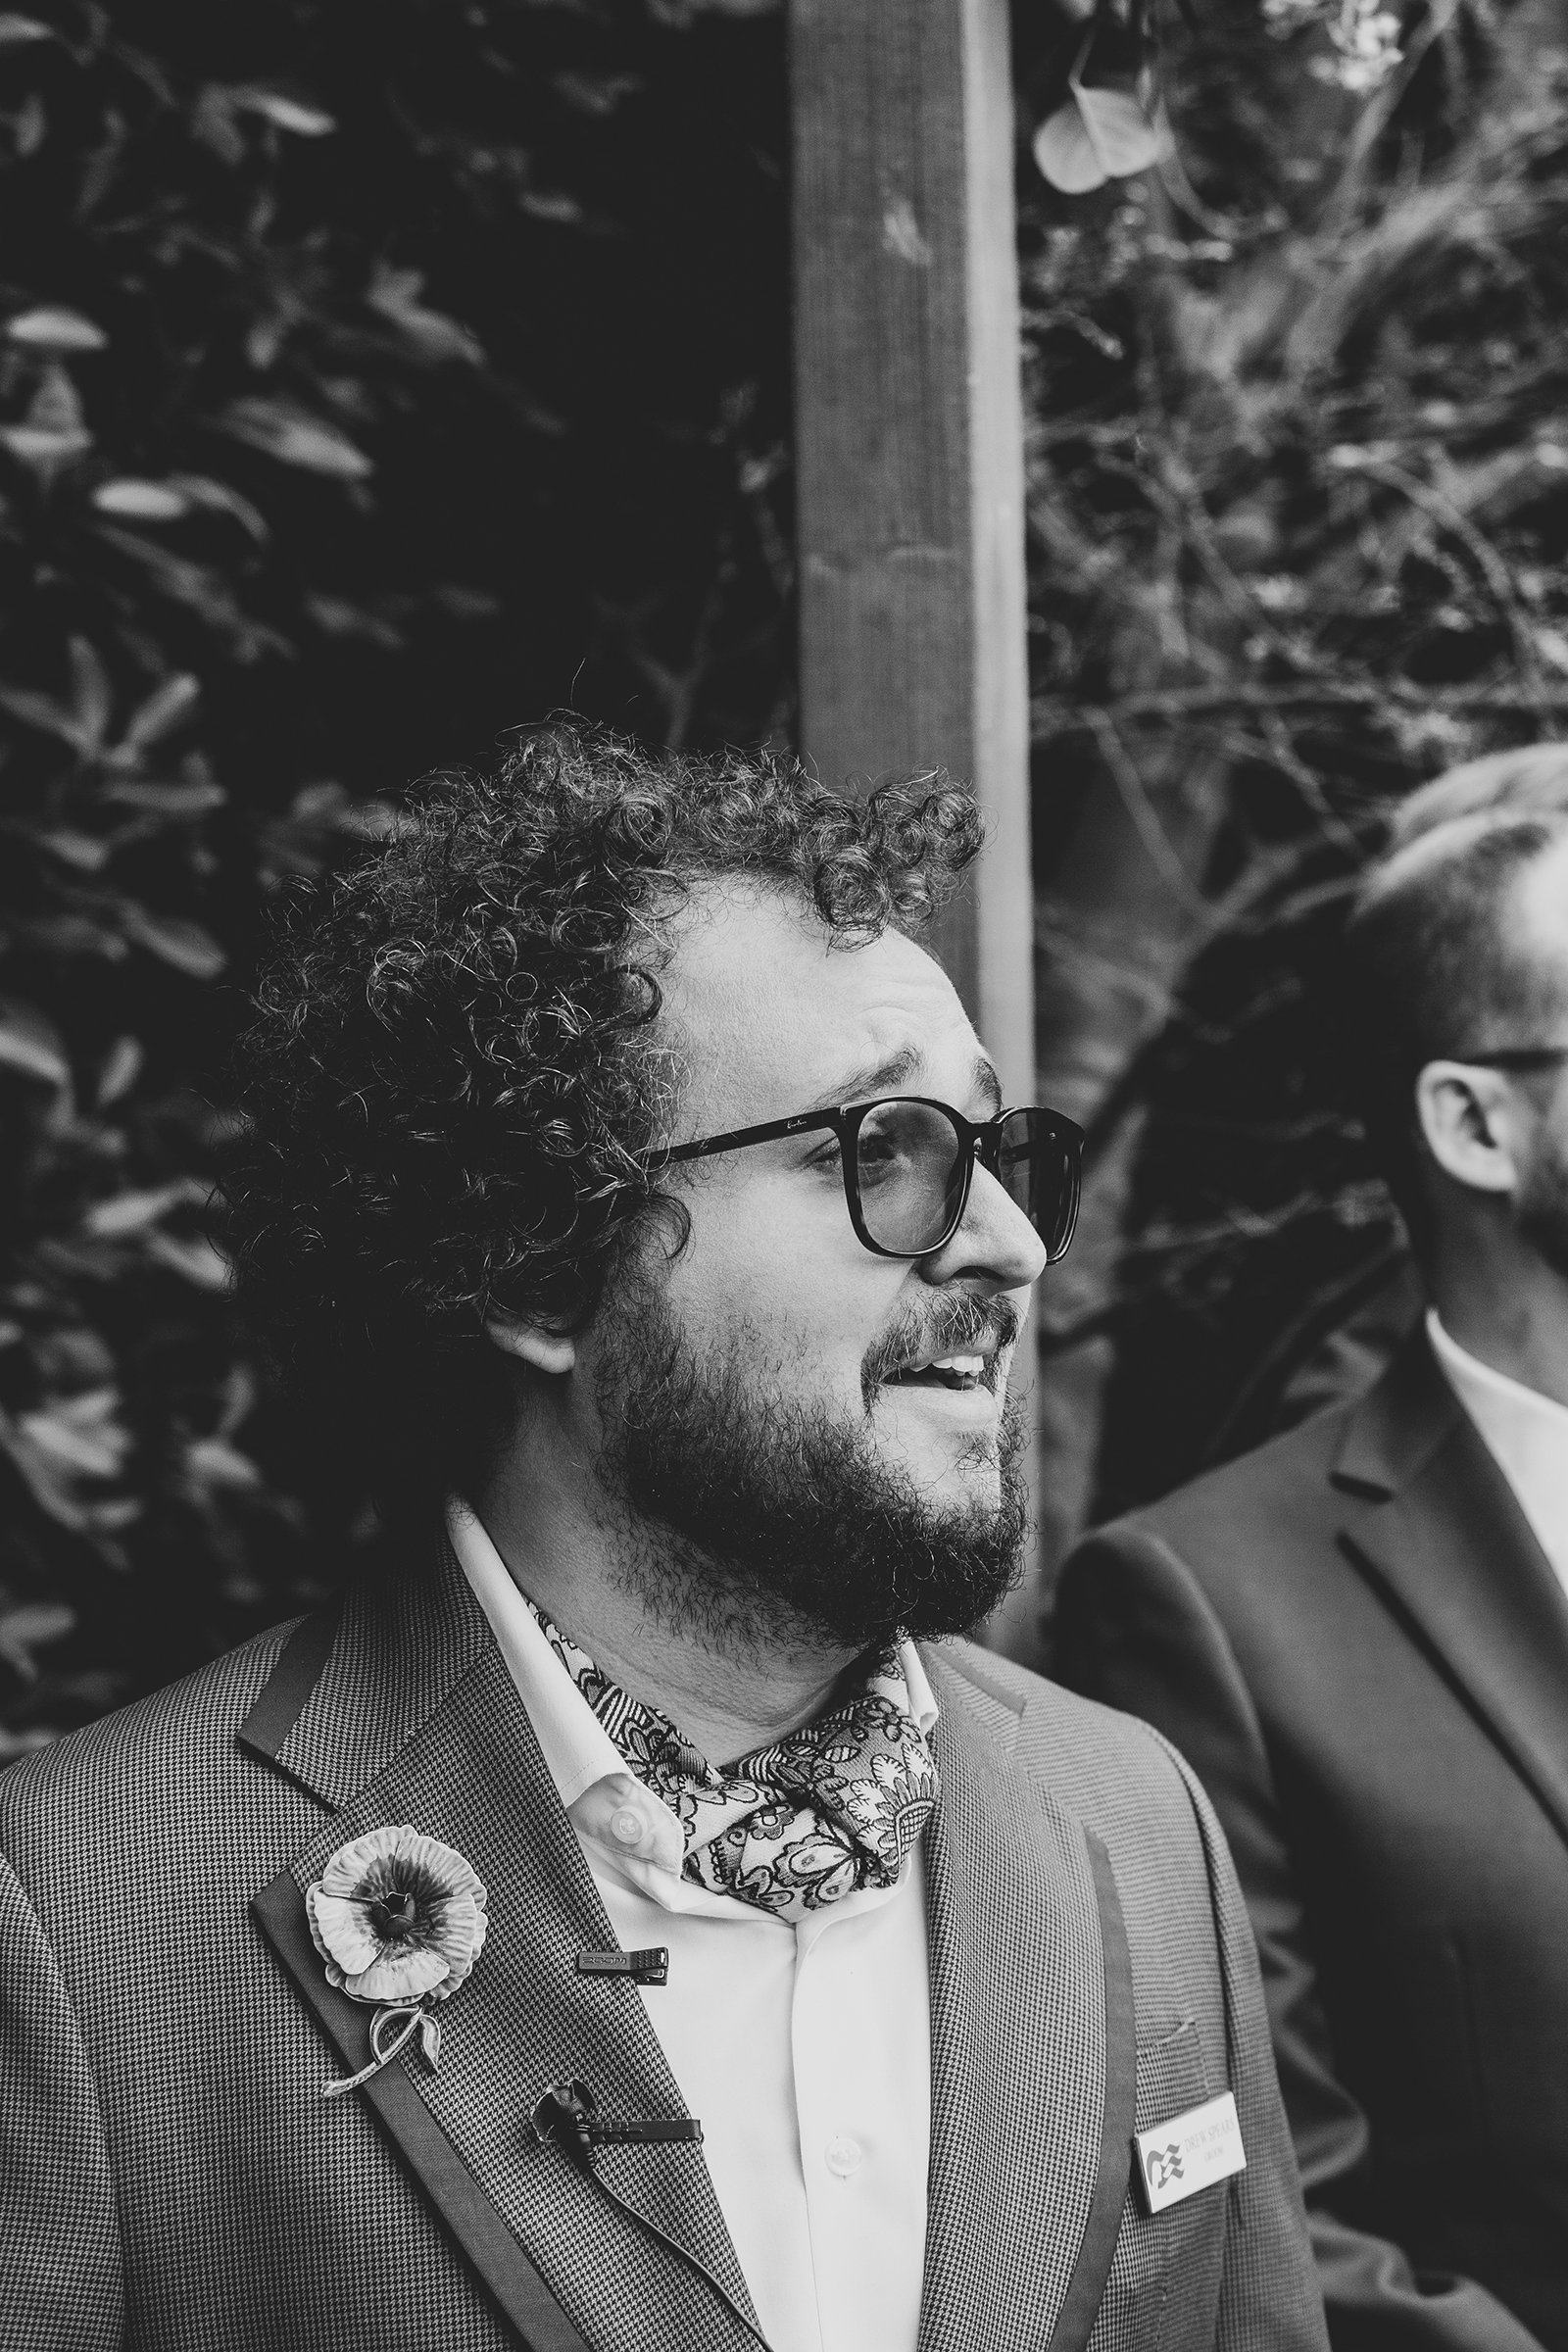 LA comedians plan the most original and unique wedding we've ever seen